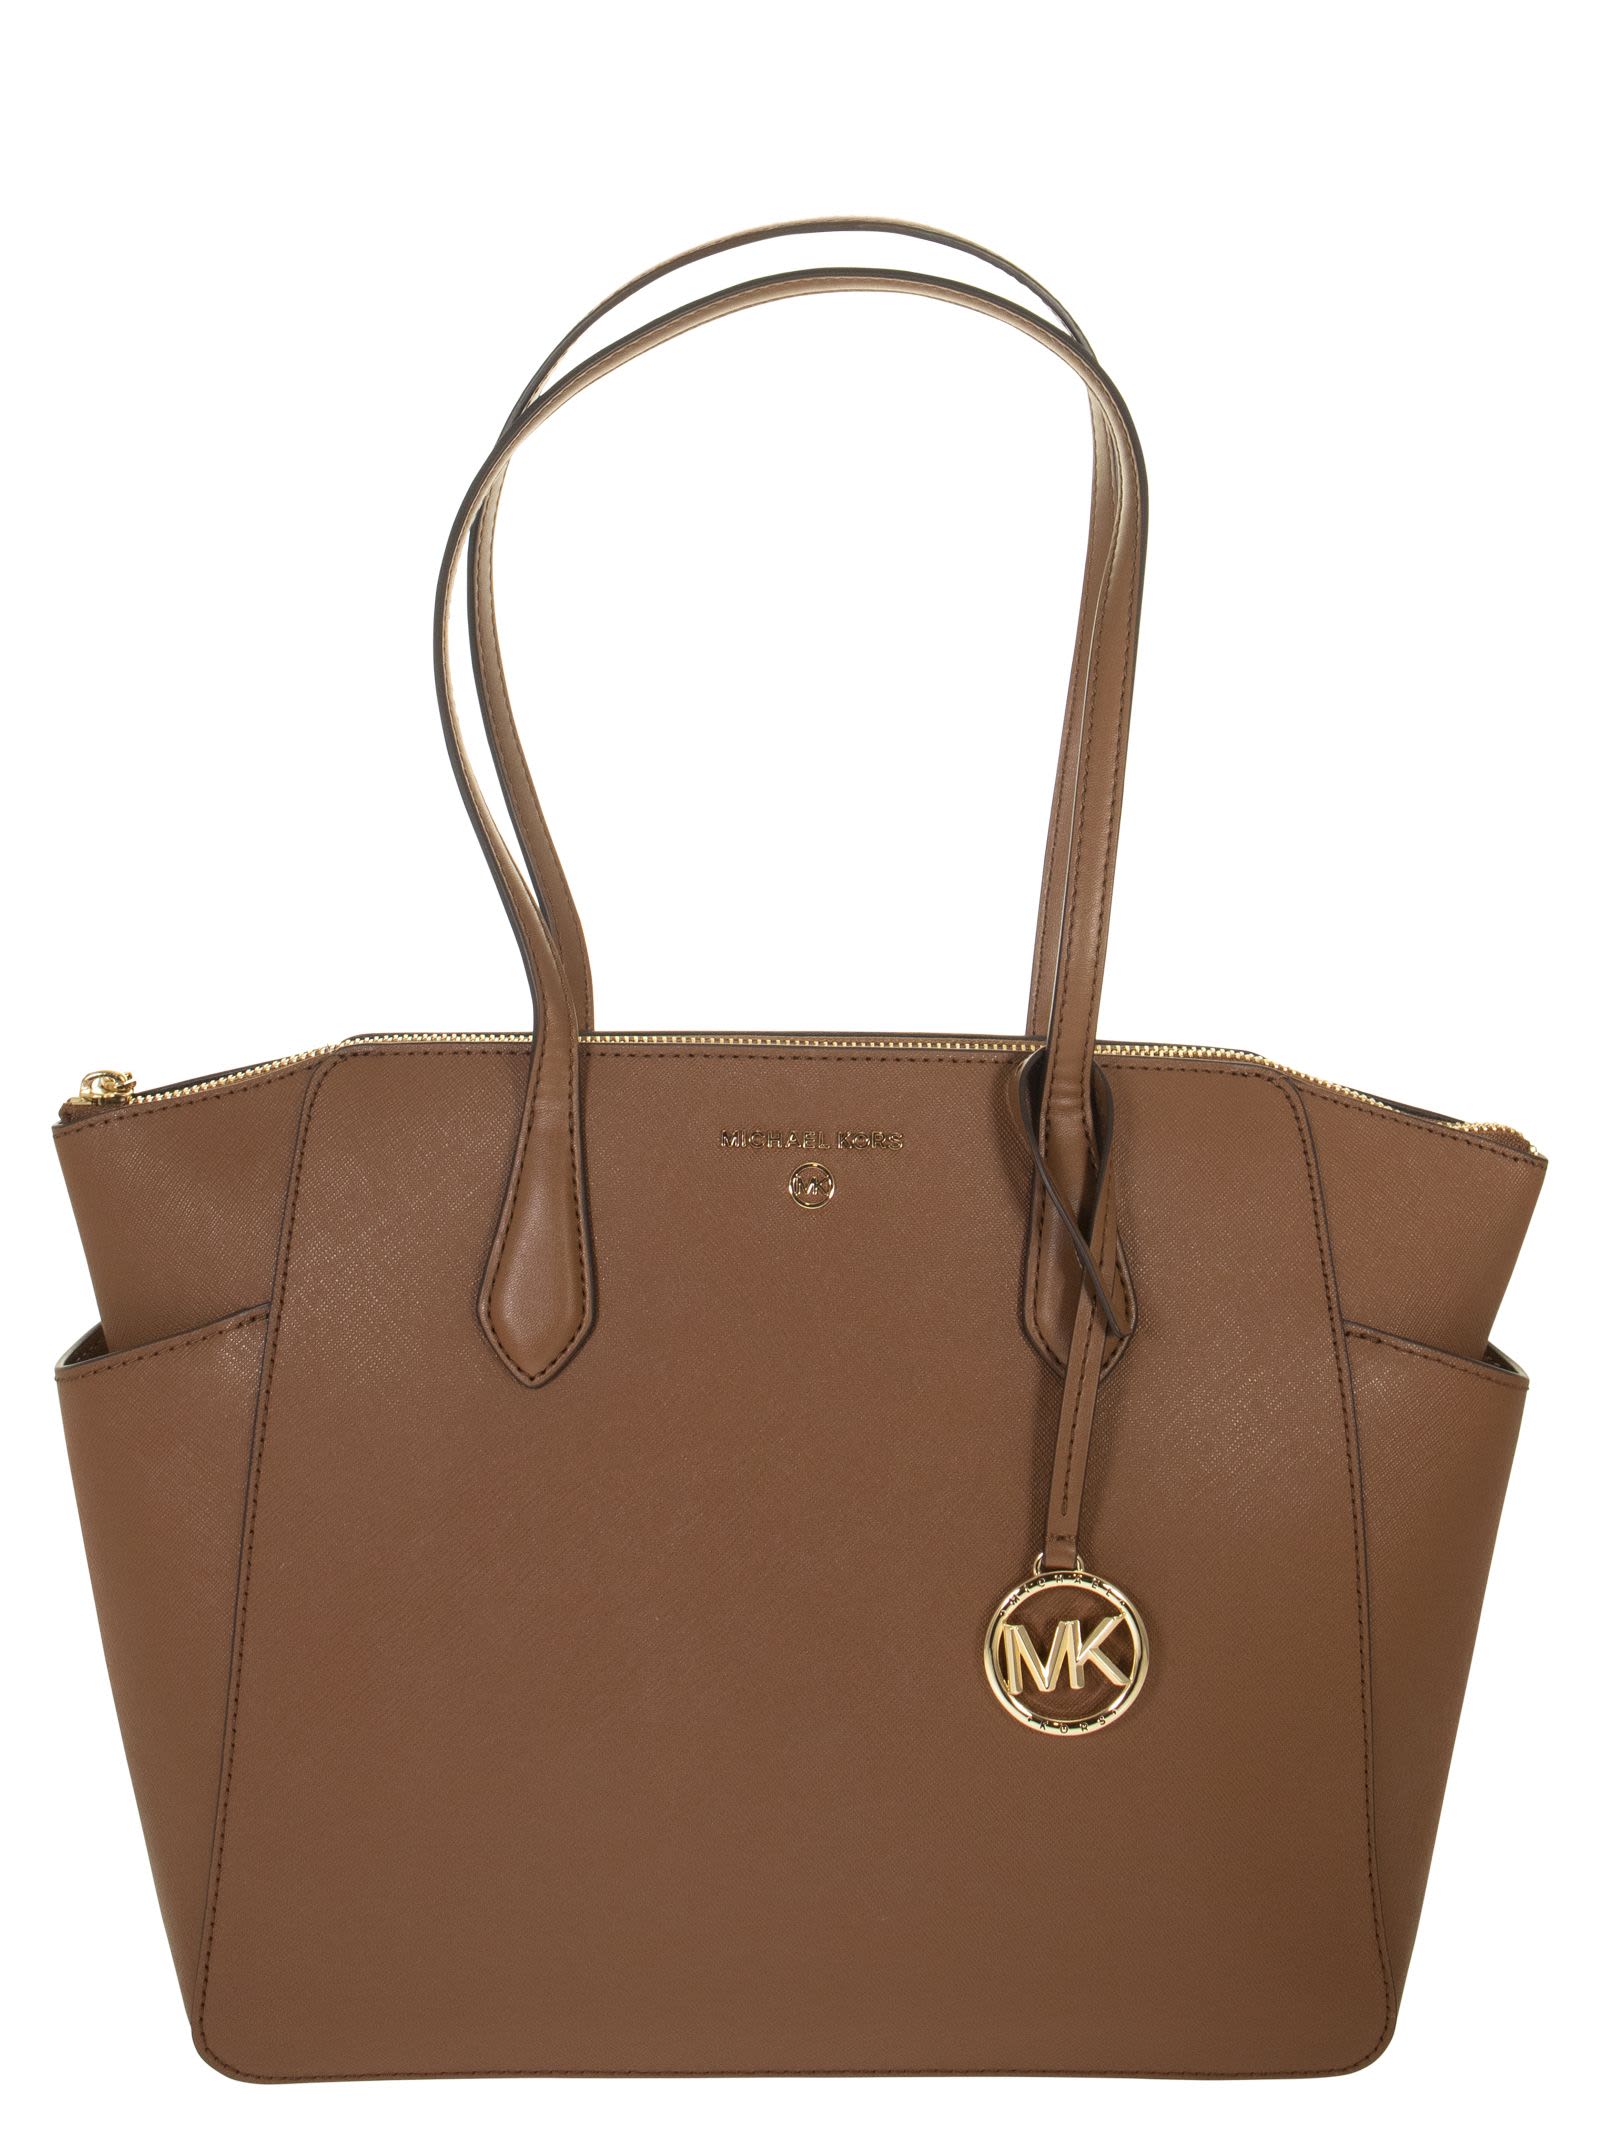 Michael Kors Marilyn - Medium Saffiano Leather Tote Bag